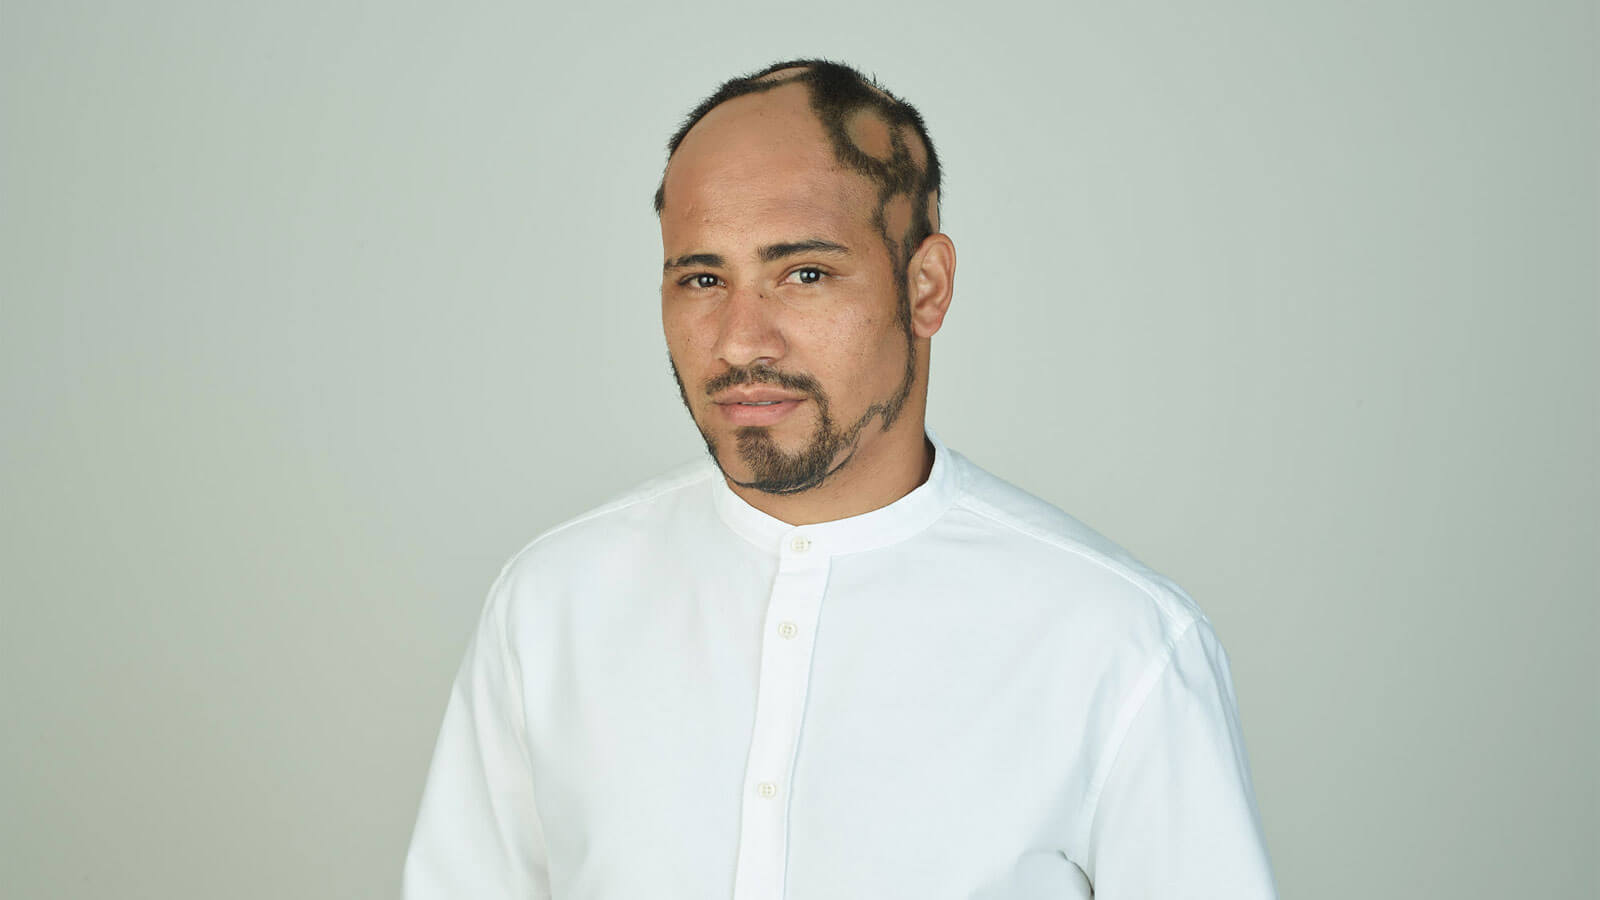 Man with Alopecia Areata